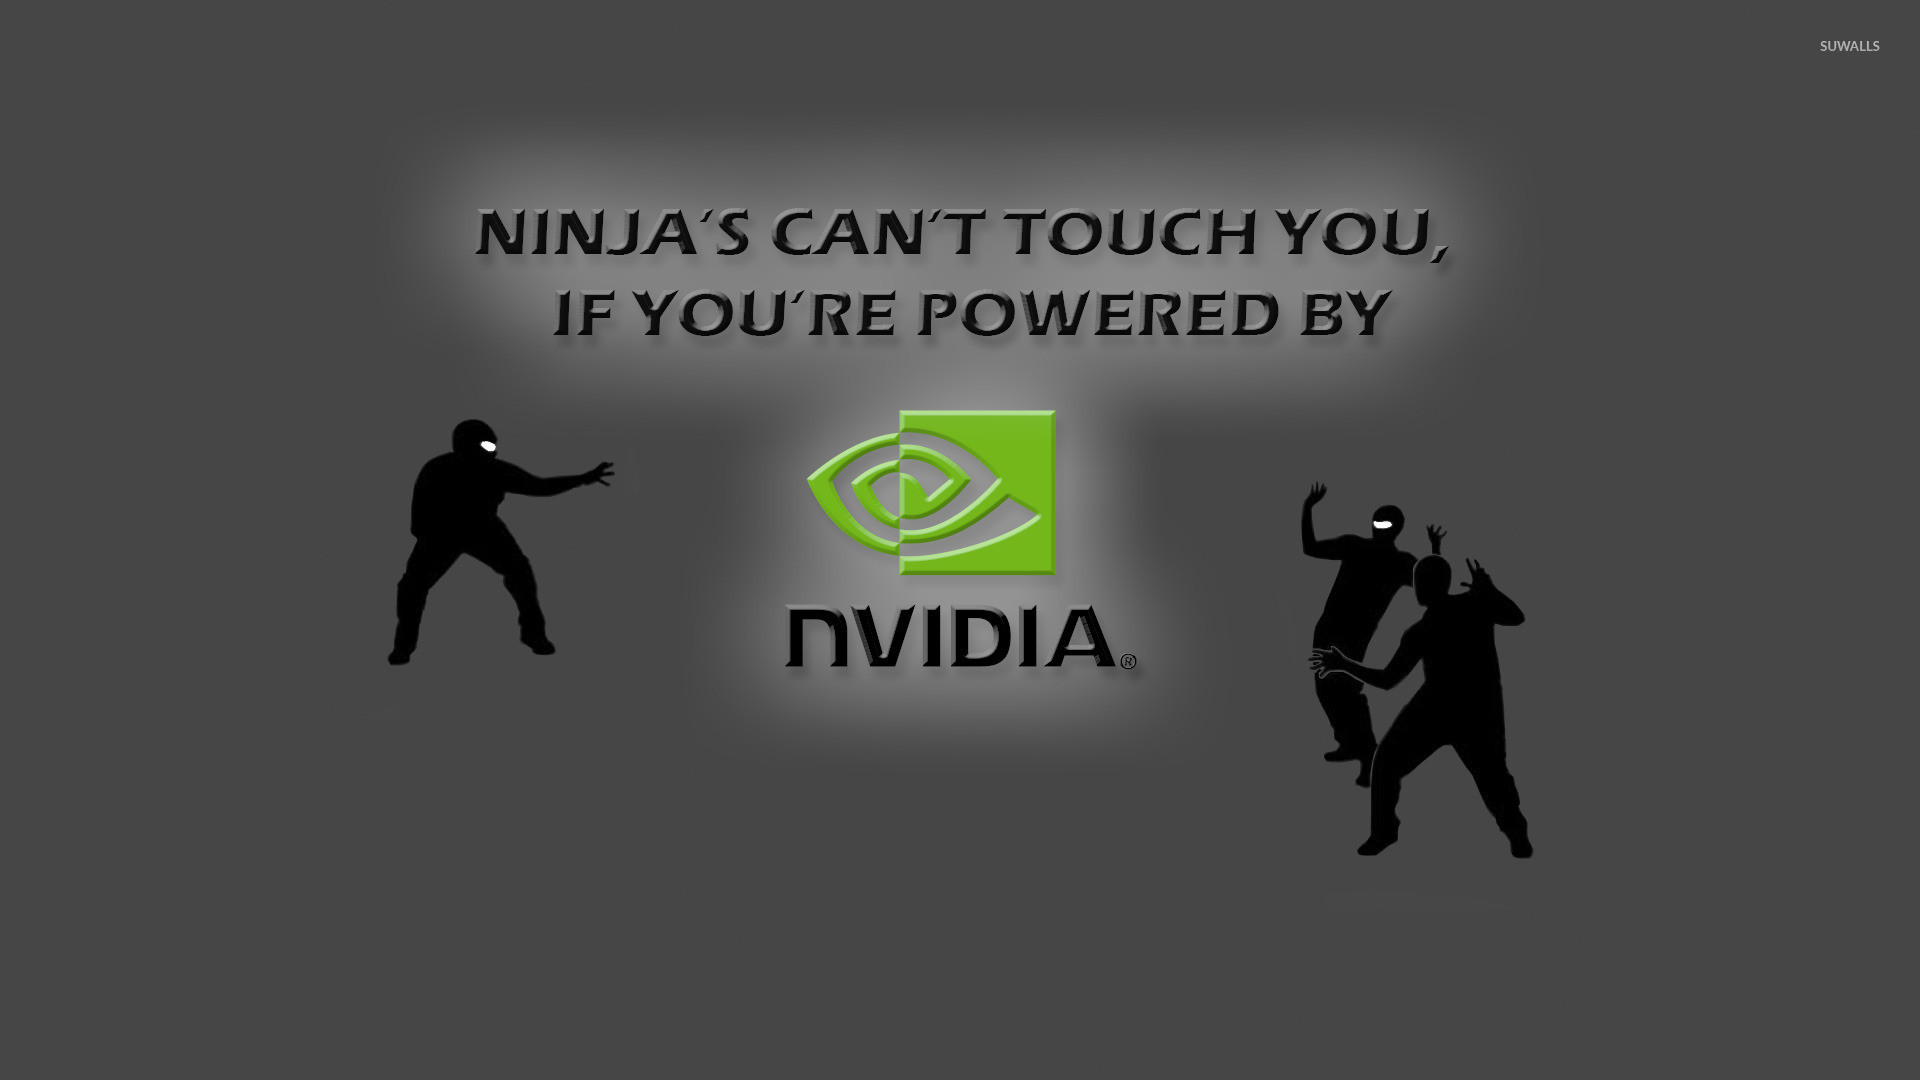 1920x1080 Ninjas vs Nvidia wallpaper